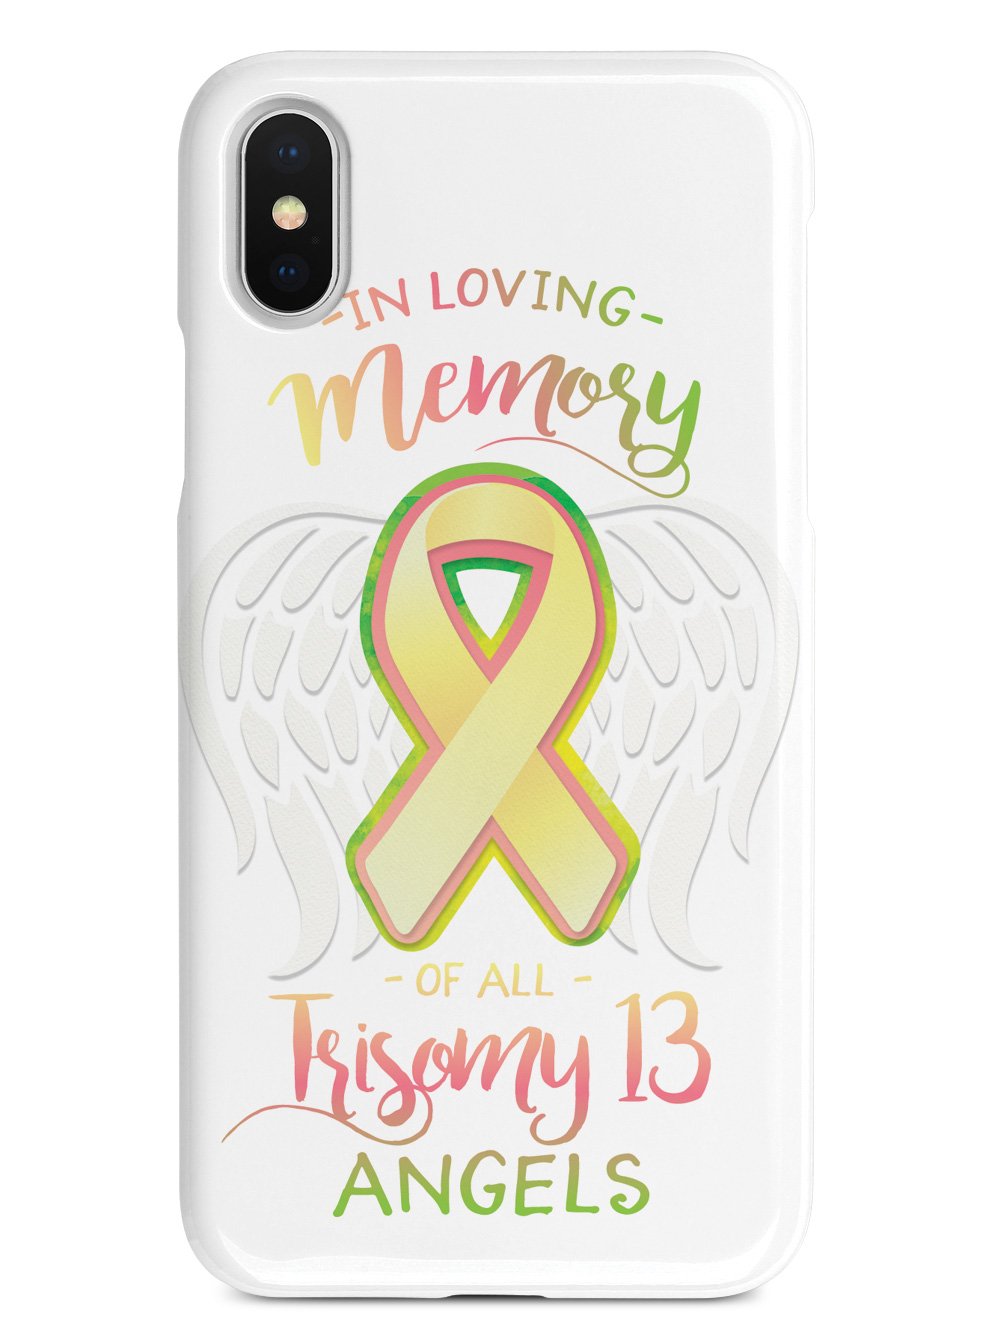 In Loving Memory - Trisomy 13 Angels Case